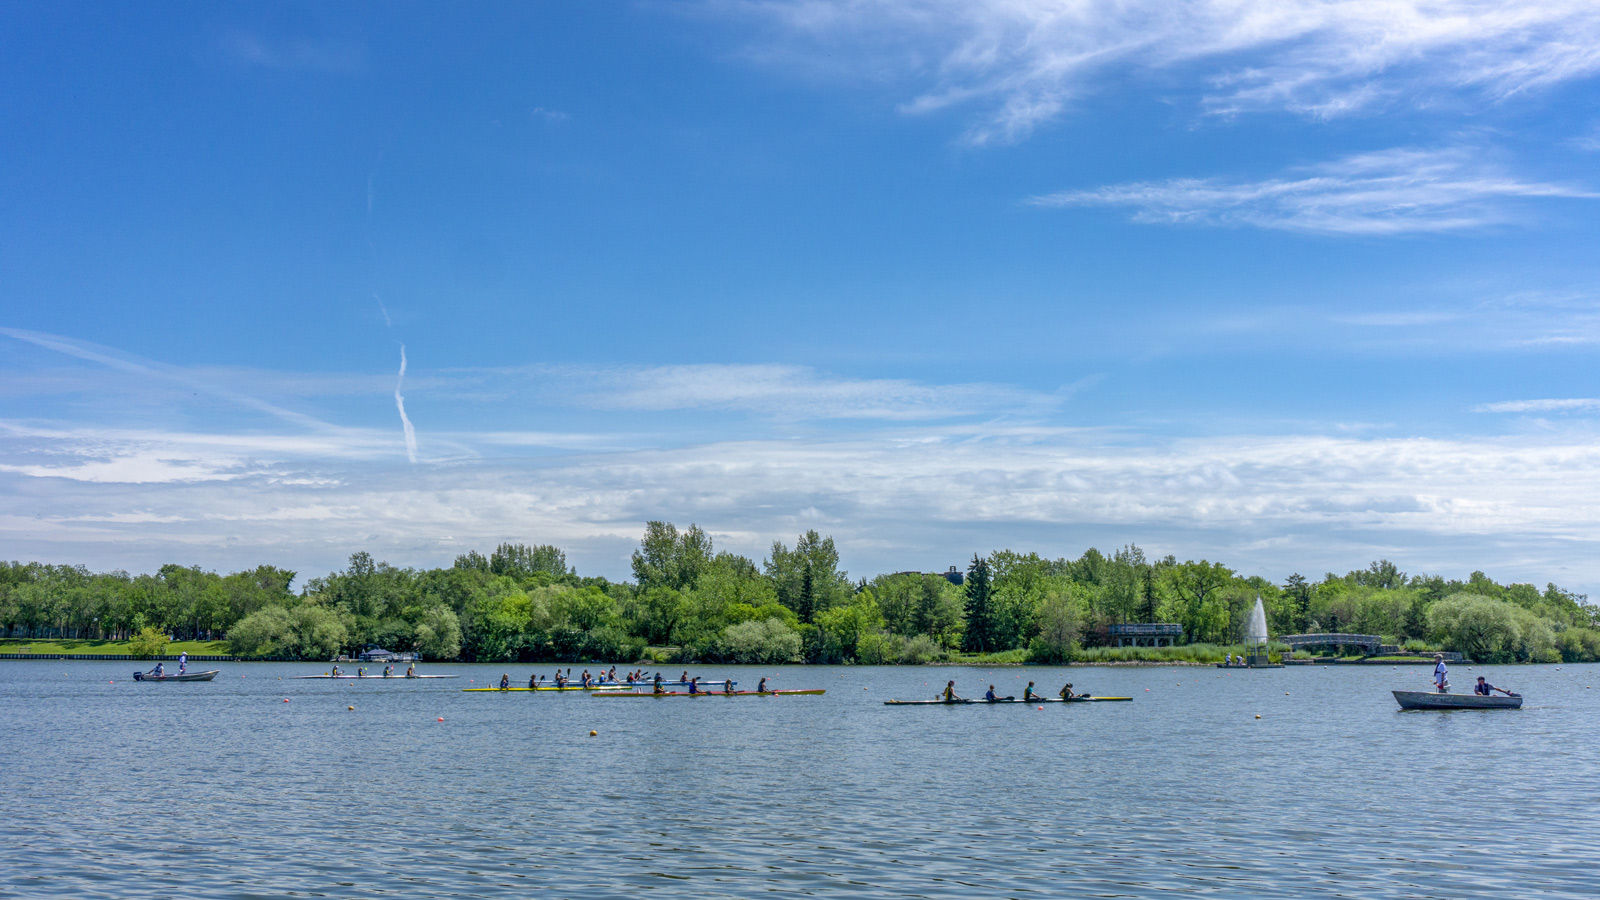 Rowers enjoy some quiet time on Wascana Lake near Regina hotels.